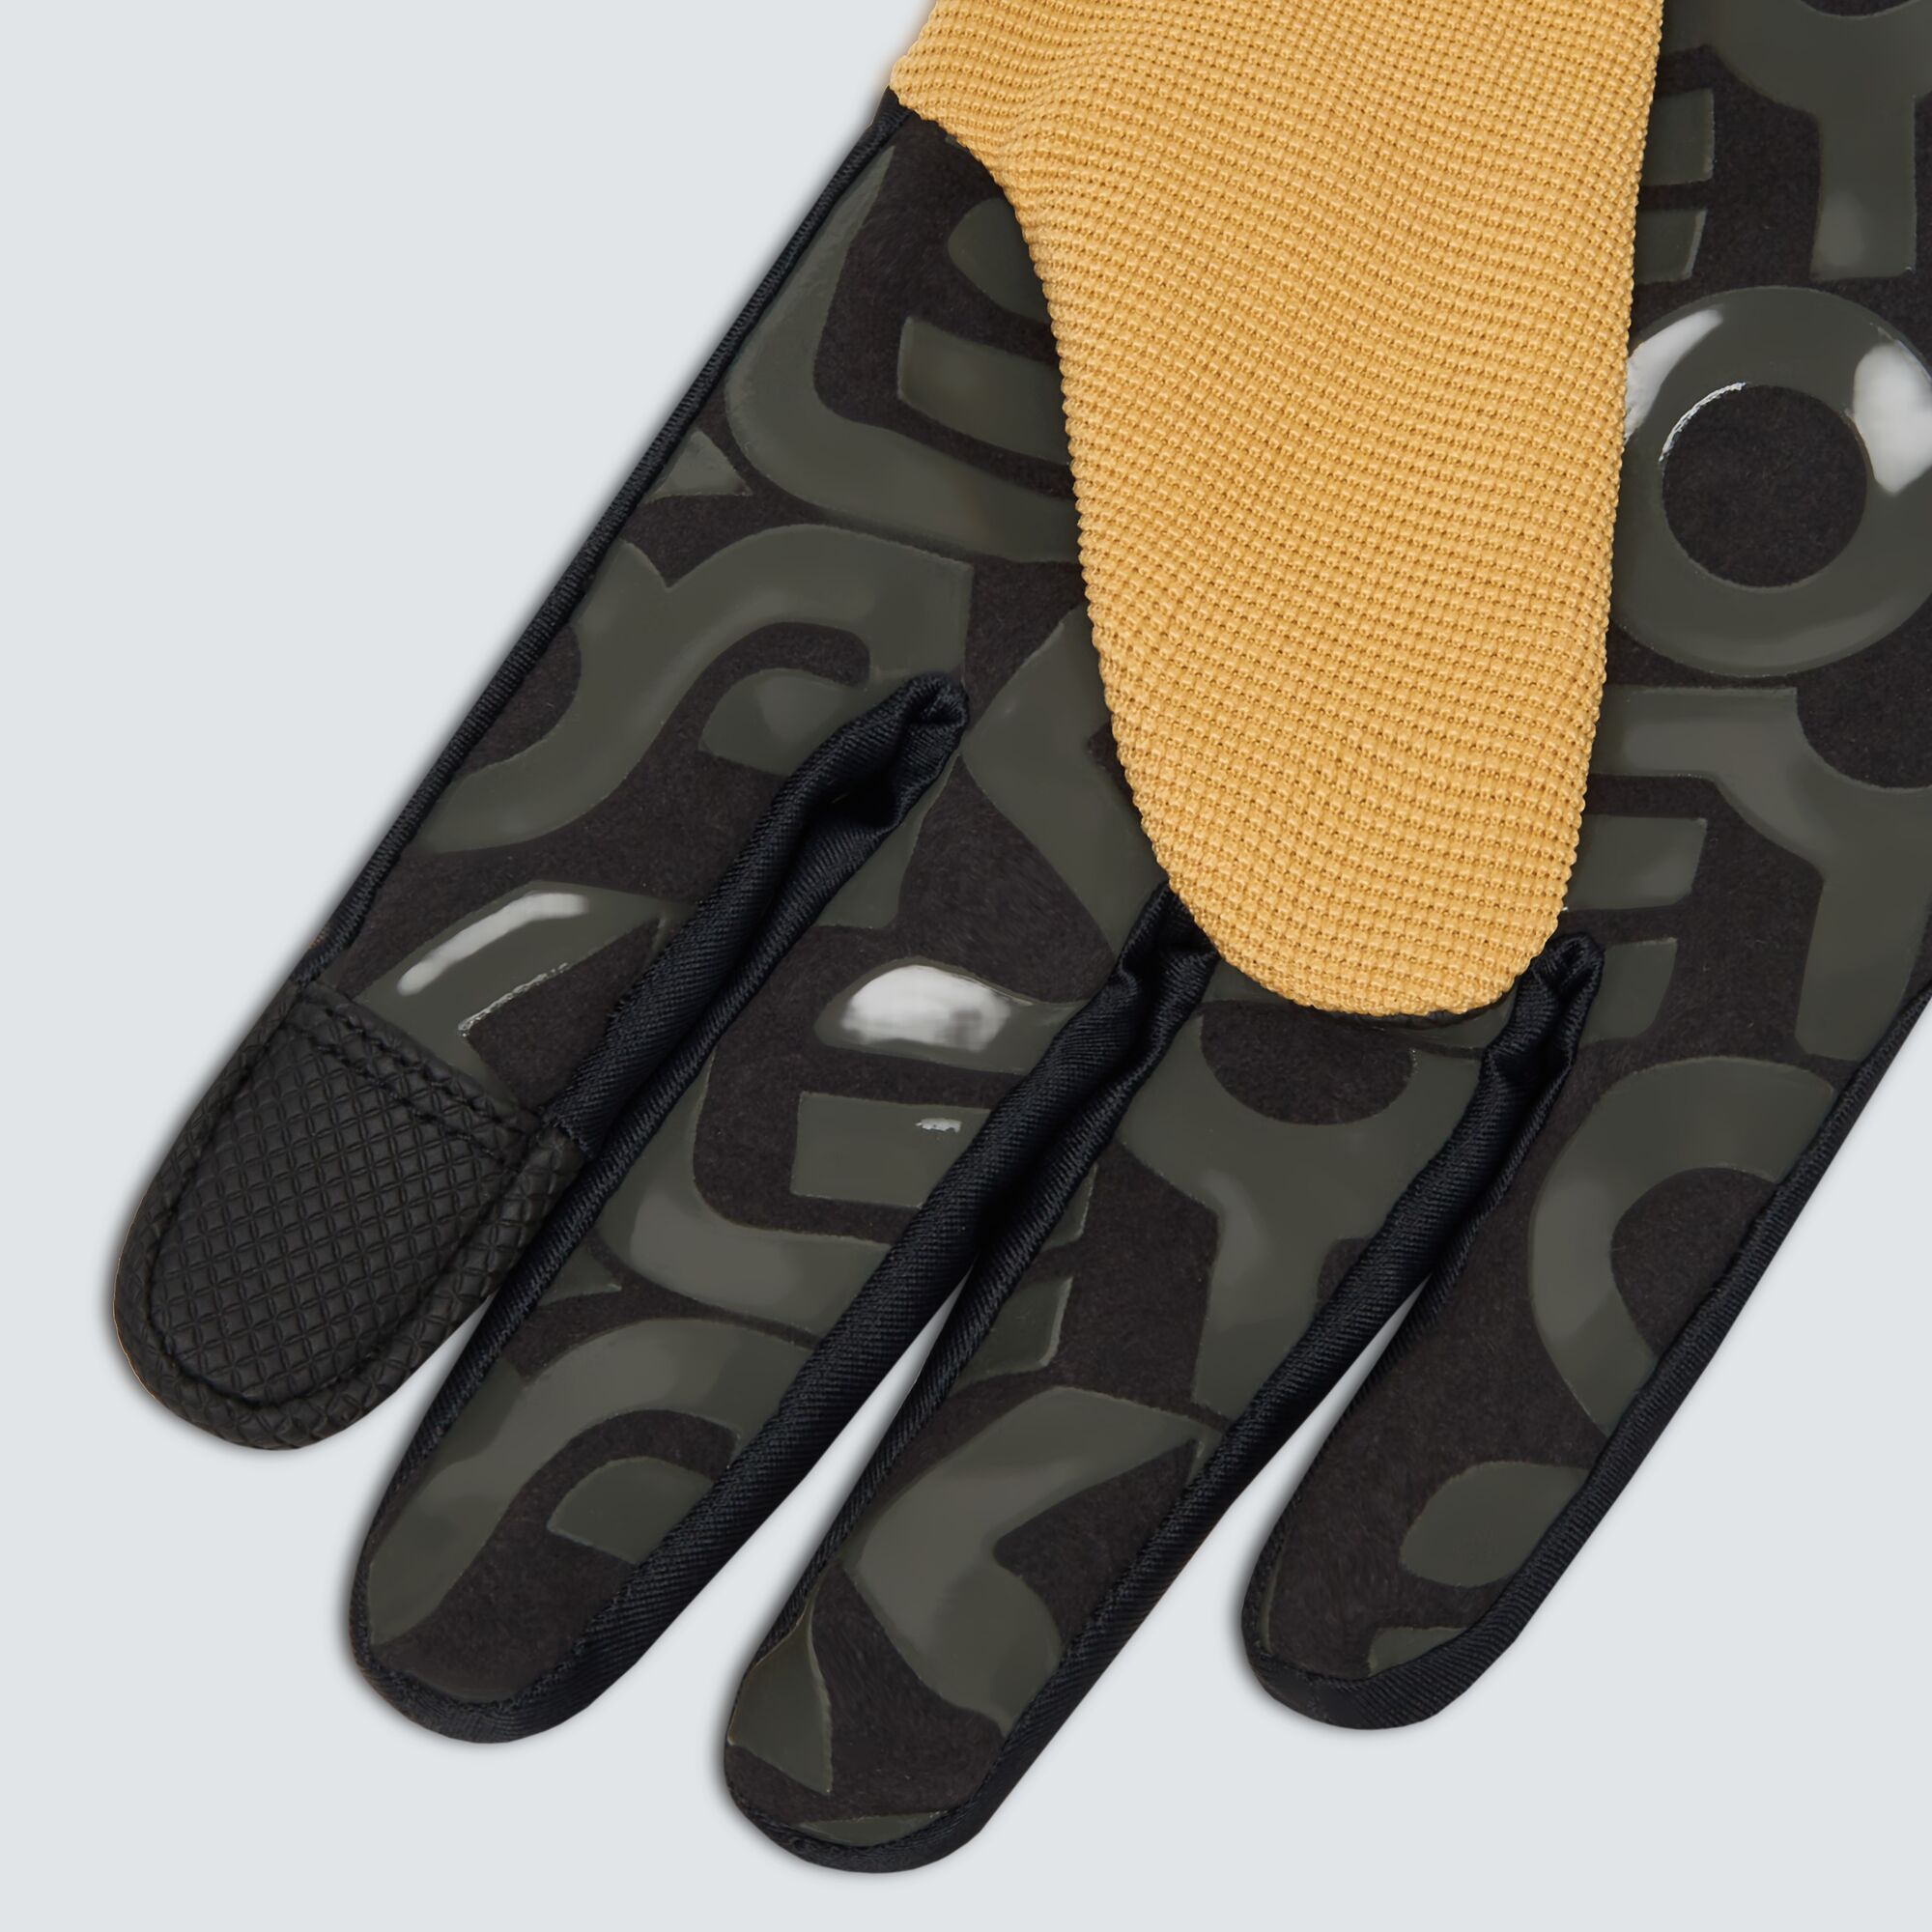 Oakley Factory Pilot Core Glove